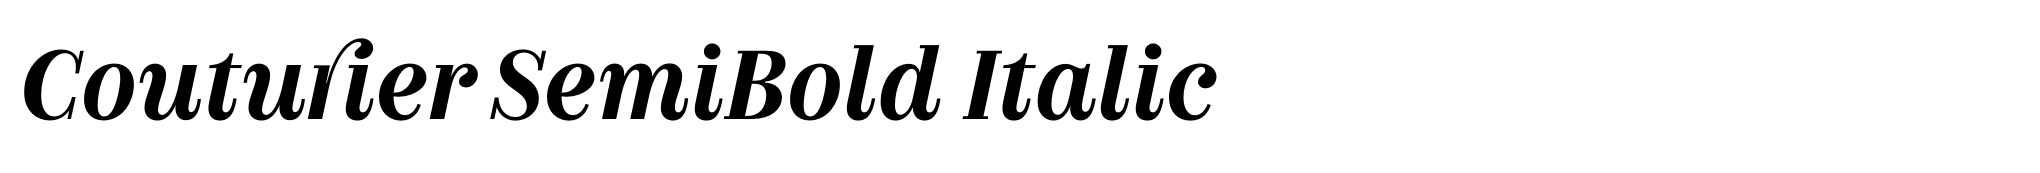 Couturier SemiBold Italic image